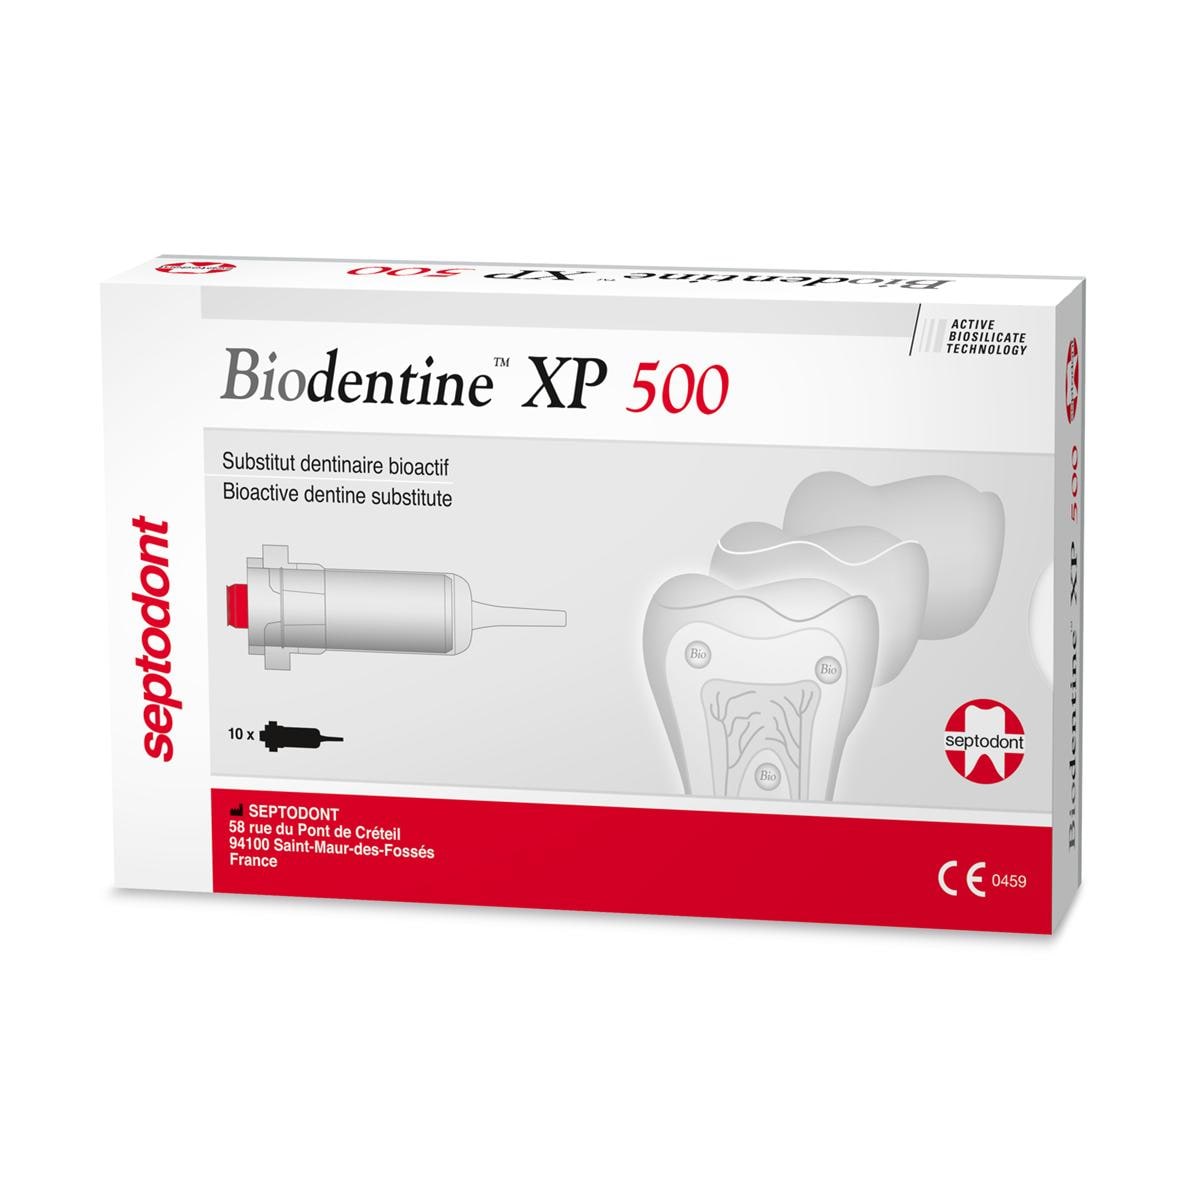 Biodentine XP 500 - Verpakking, 10 cartridges